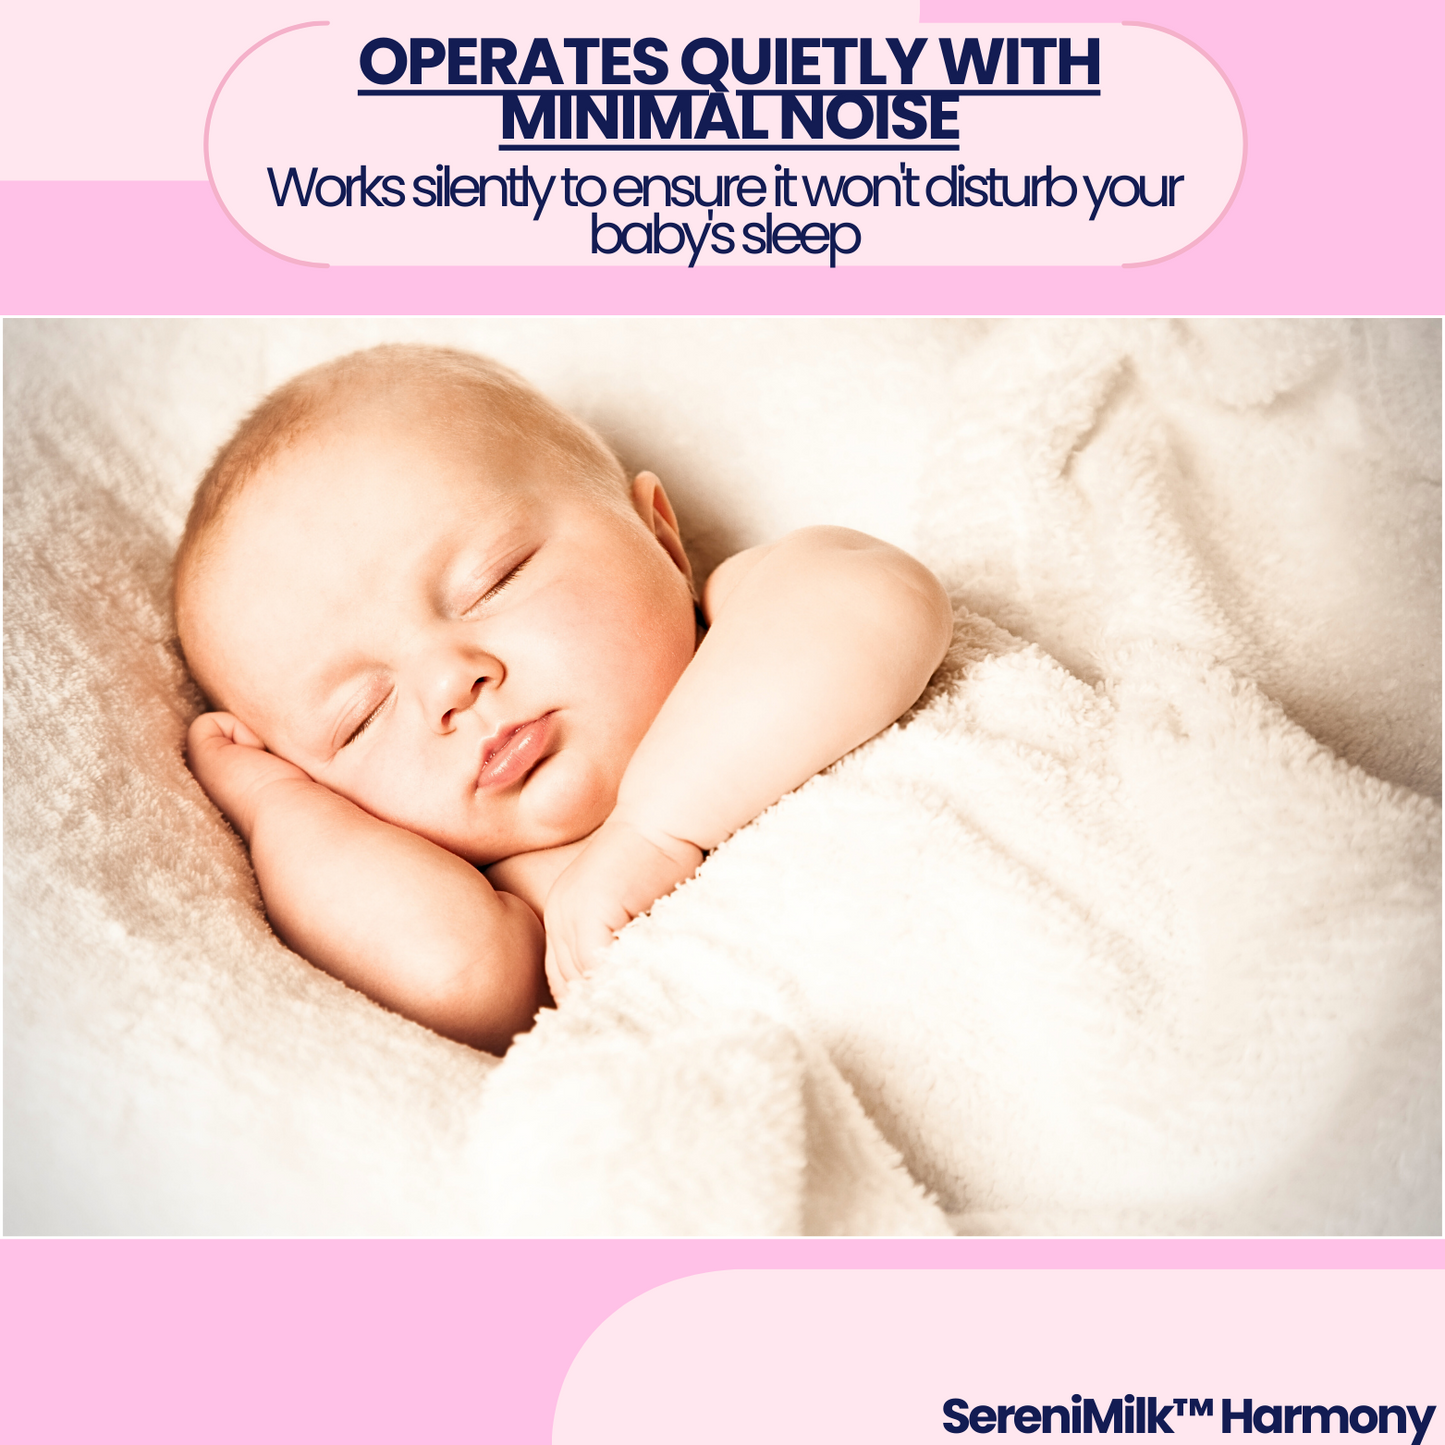 SereniMilk™ Harmony: Silent Hands-Free Electric Milk Extractor for Breastfeeding Comfort